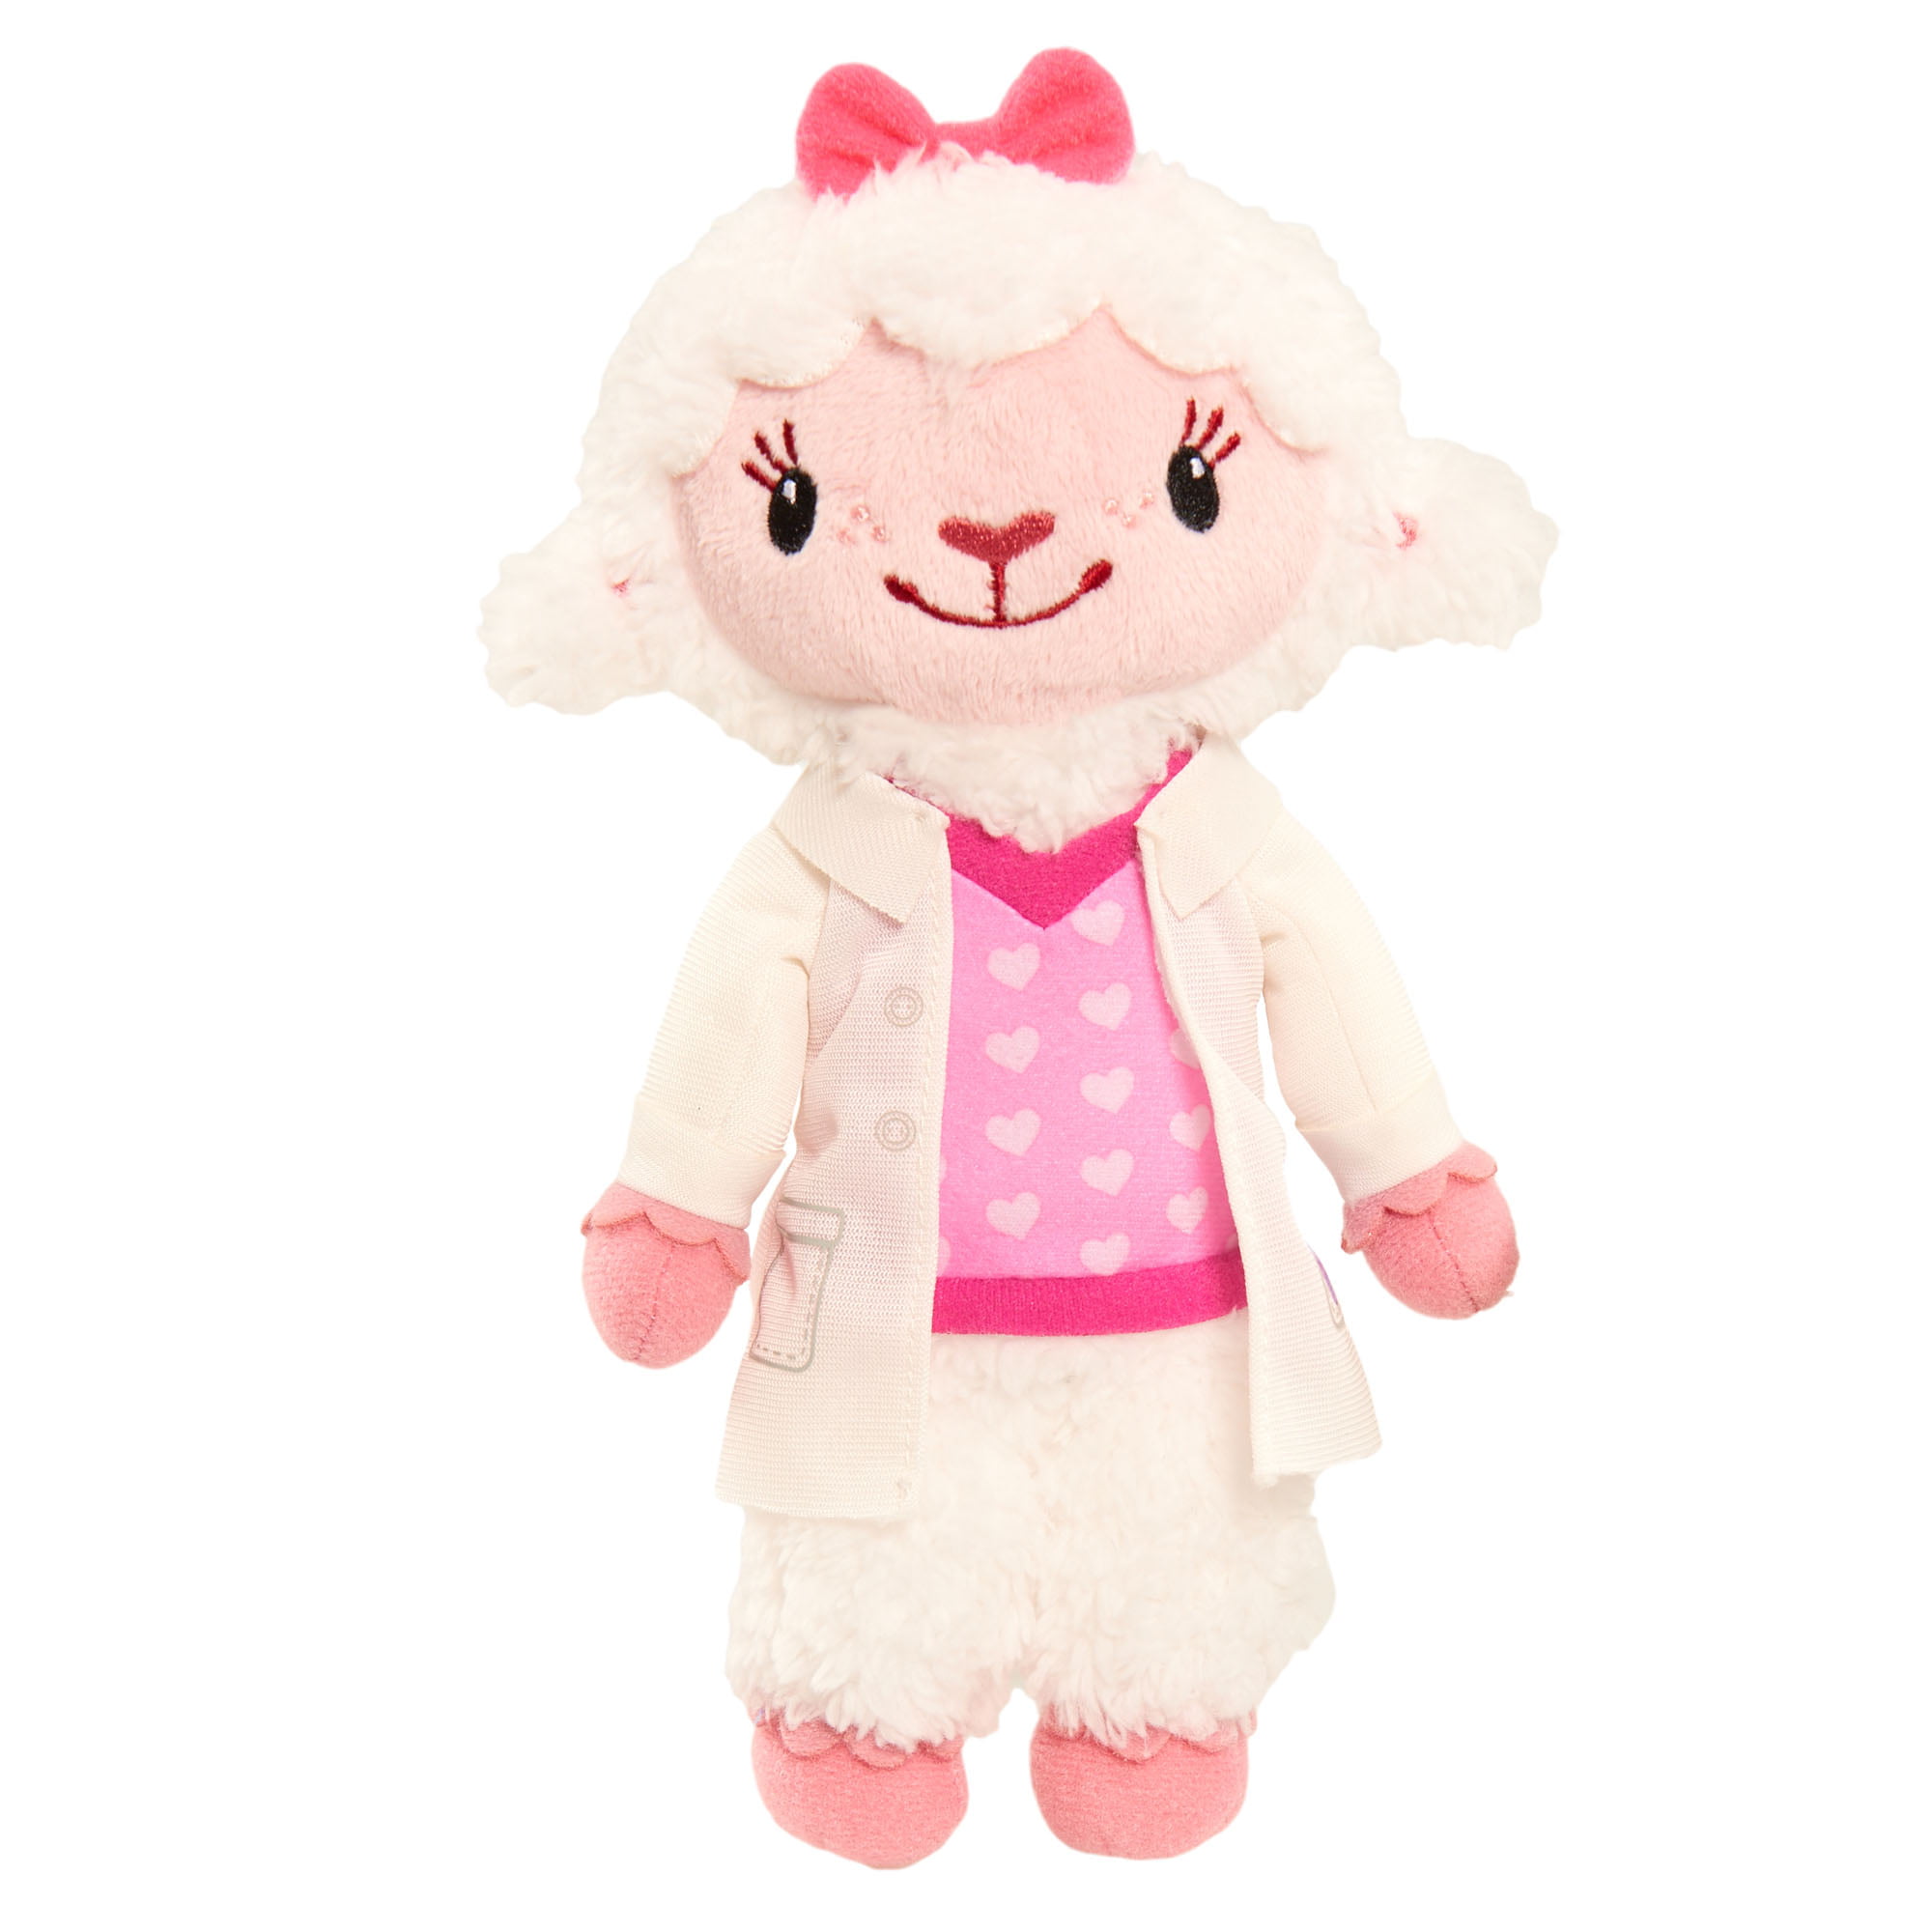 Disney Doc McStuffins Lambie 7" Mini Bean Bag Plush Doll Toy brand new with tag 